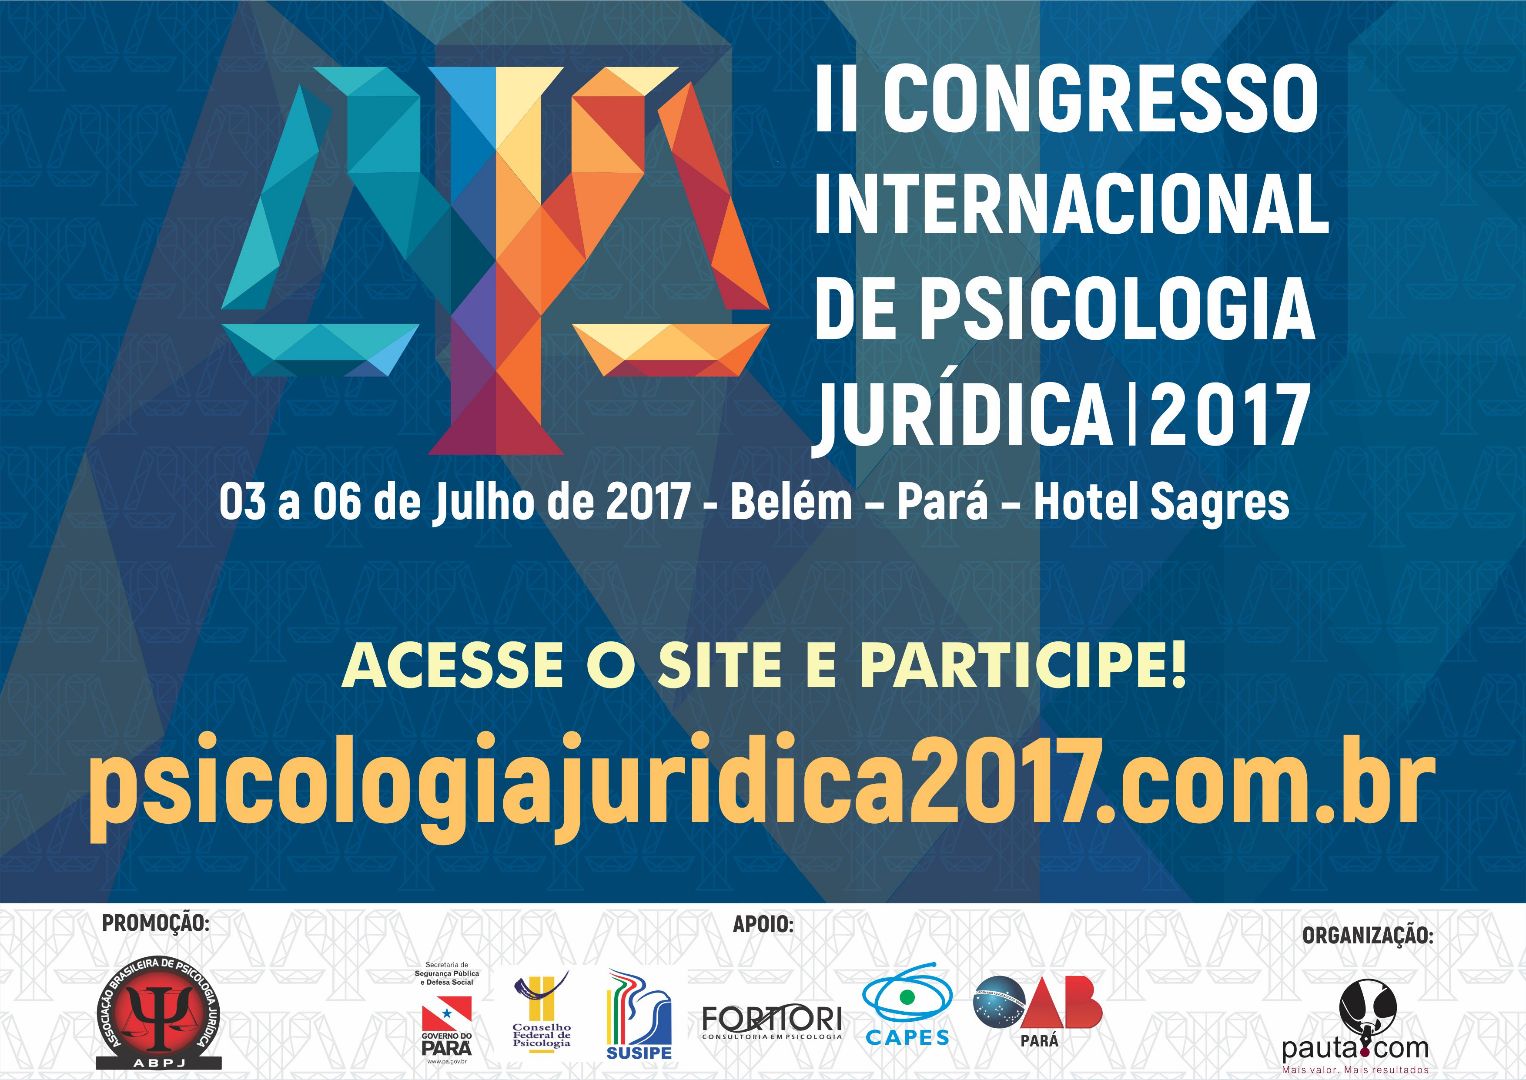 II CONGRESSO INTERNACIONAL DE PSICOLOGIA JURIDICA